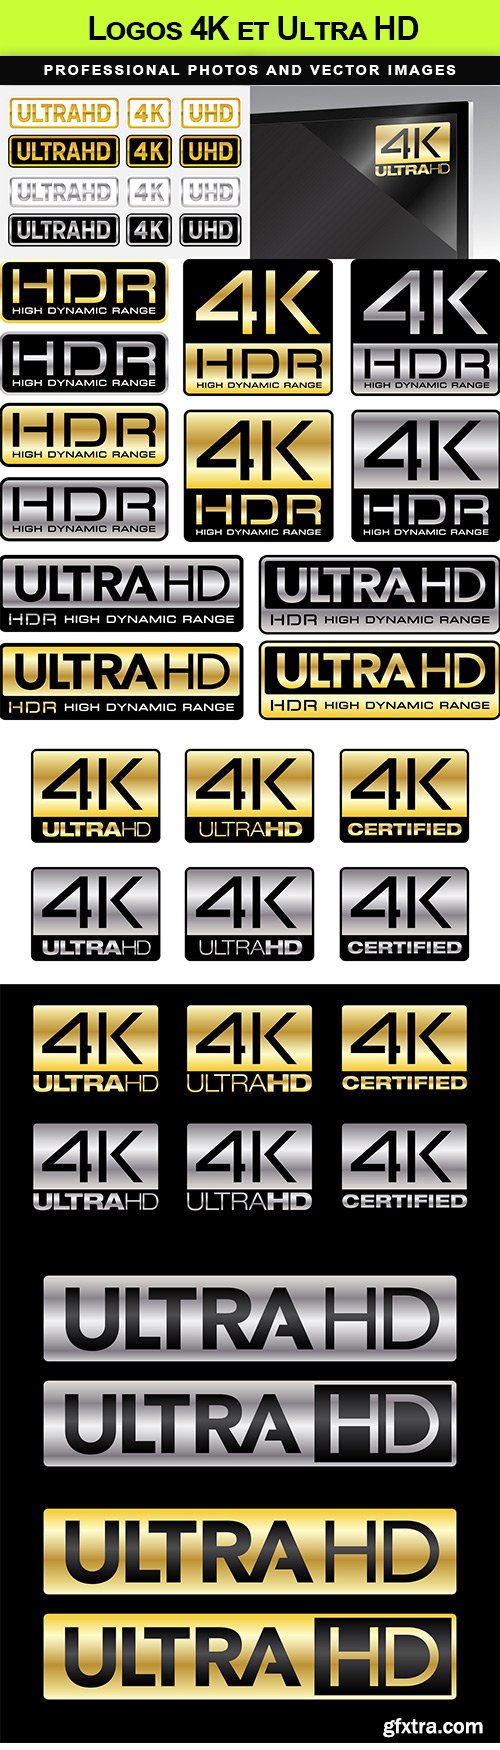 Logos 4K et Ultra HD